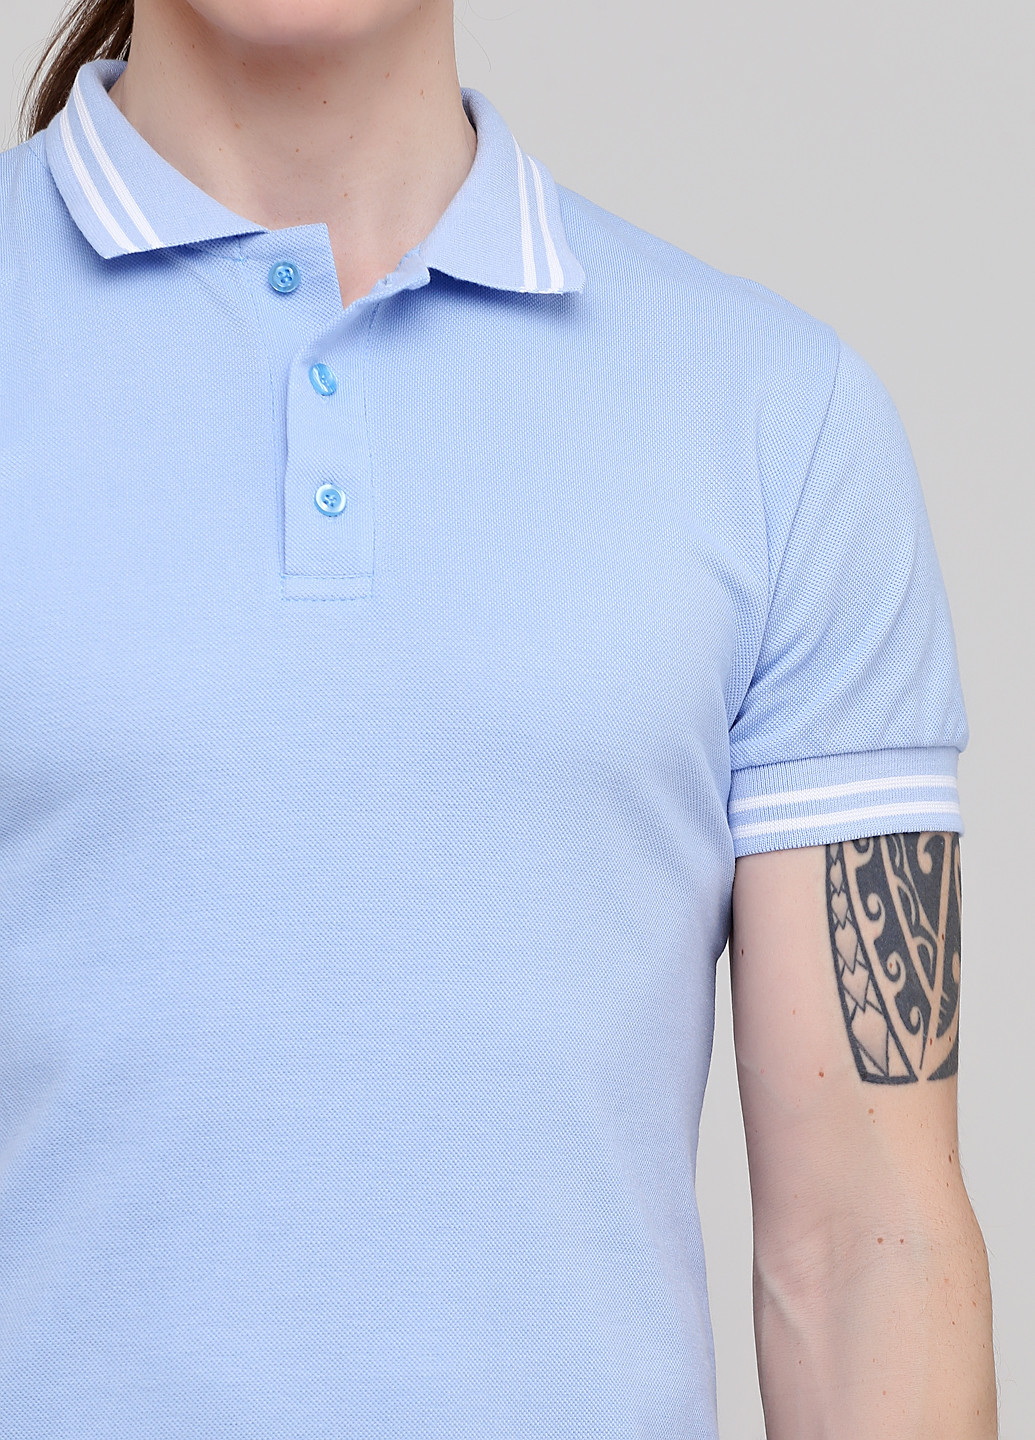 Чоловіча футболка поло блакитна з манжетами 100% хлопок Melgo поло (216767363)